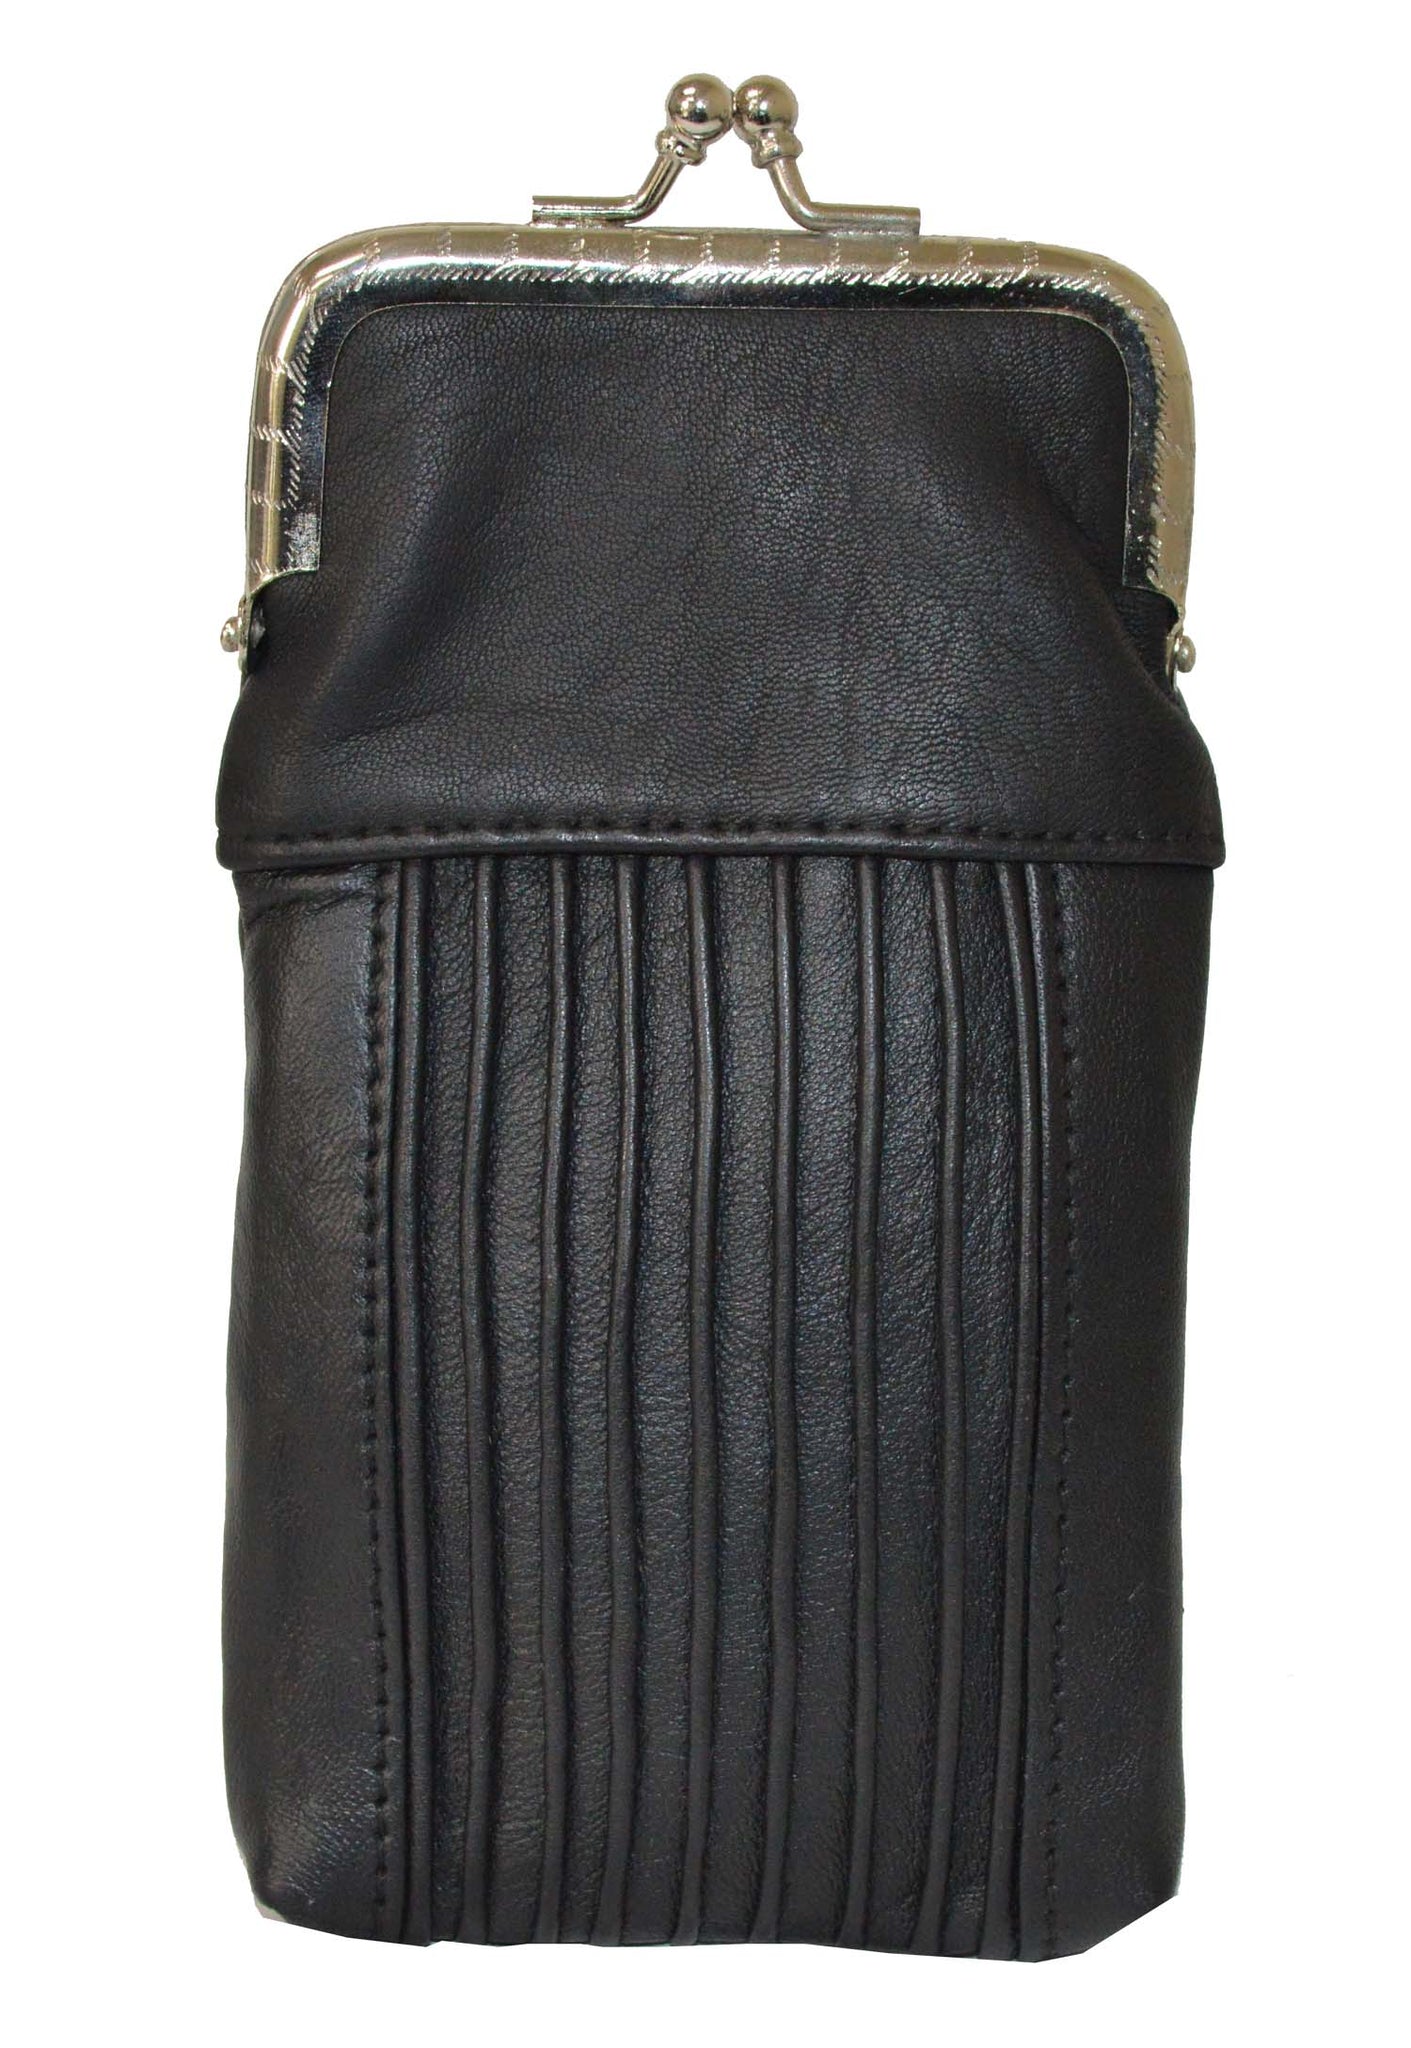 Luxury Black Leather Cigarette Case 